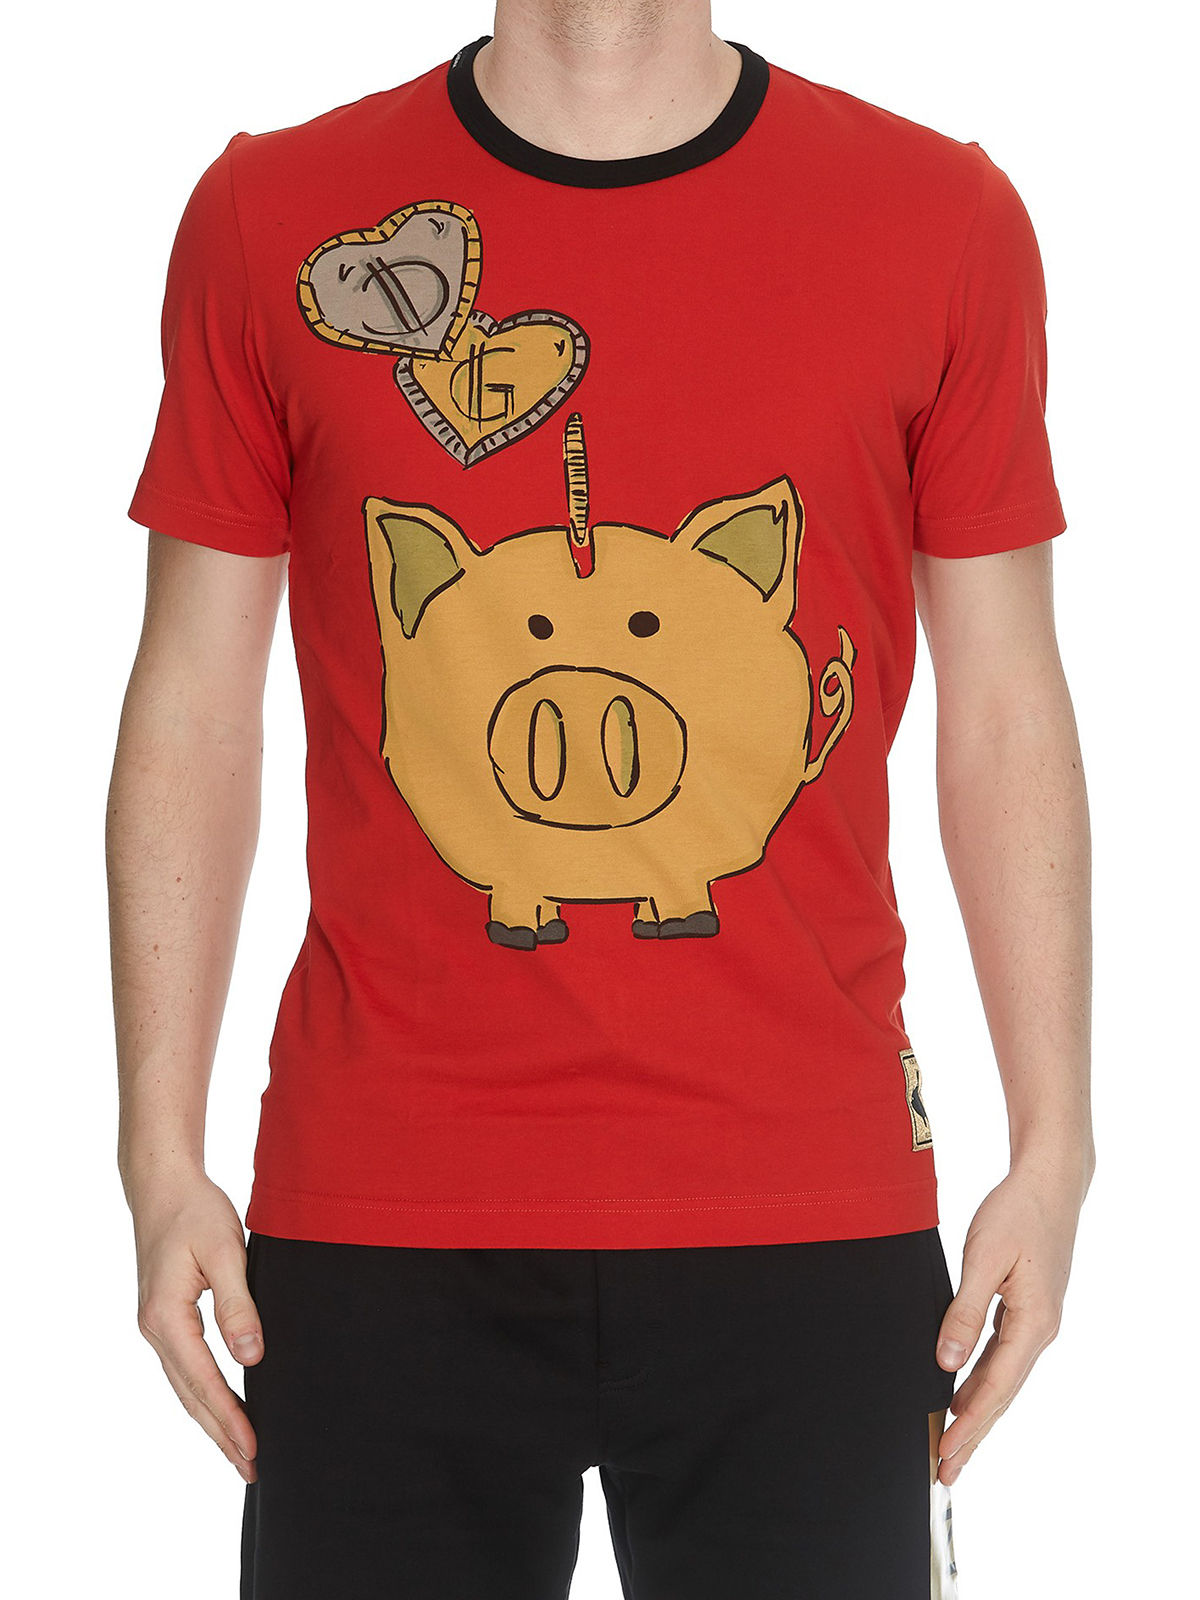 T-shirts Dolce & Gabbana - Red cotton printed T-shirt - G8IA8THH7EZHSW54